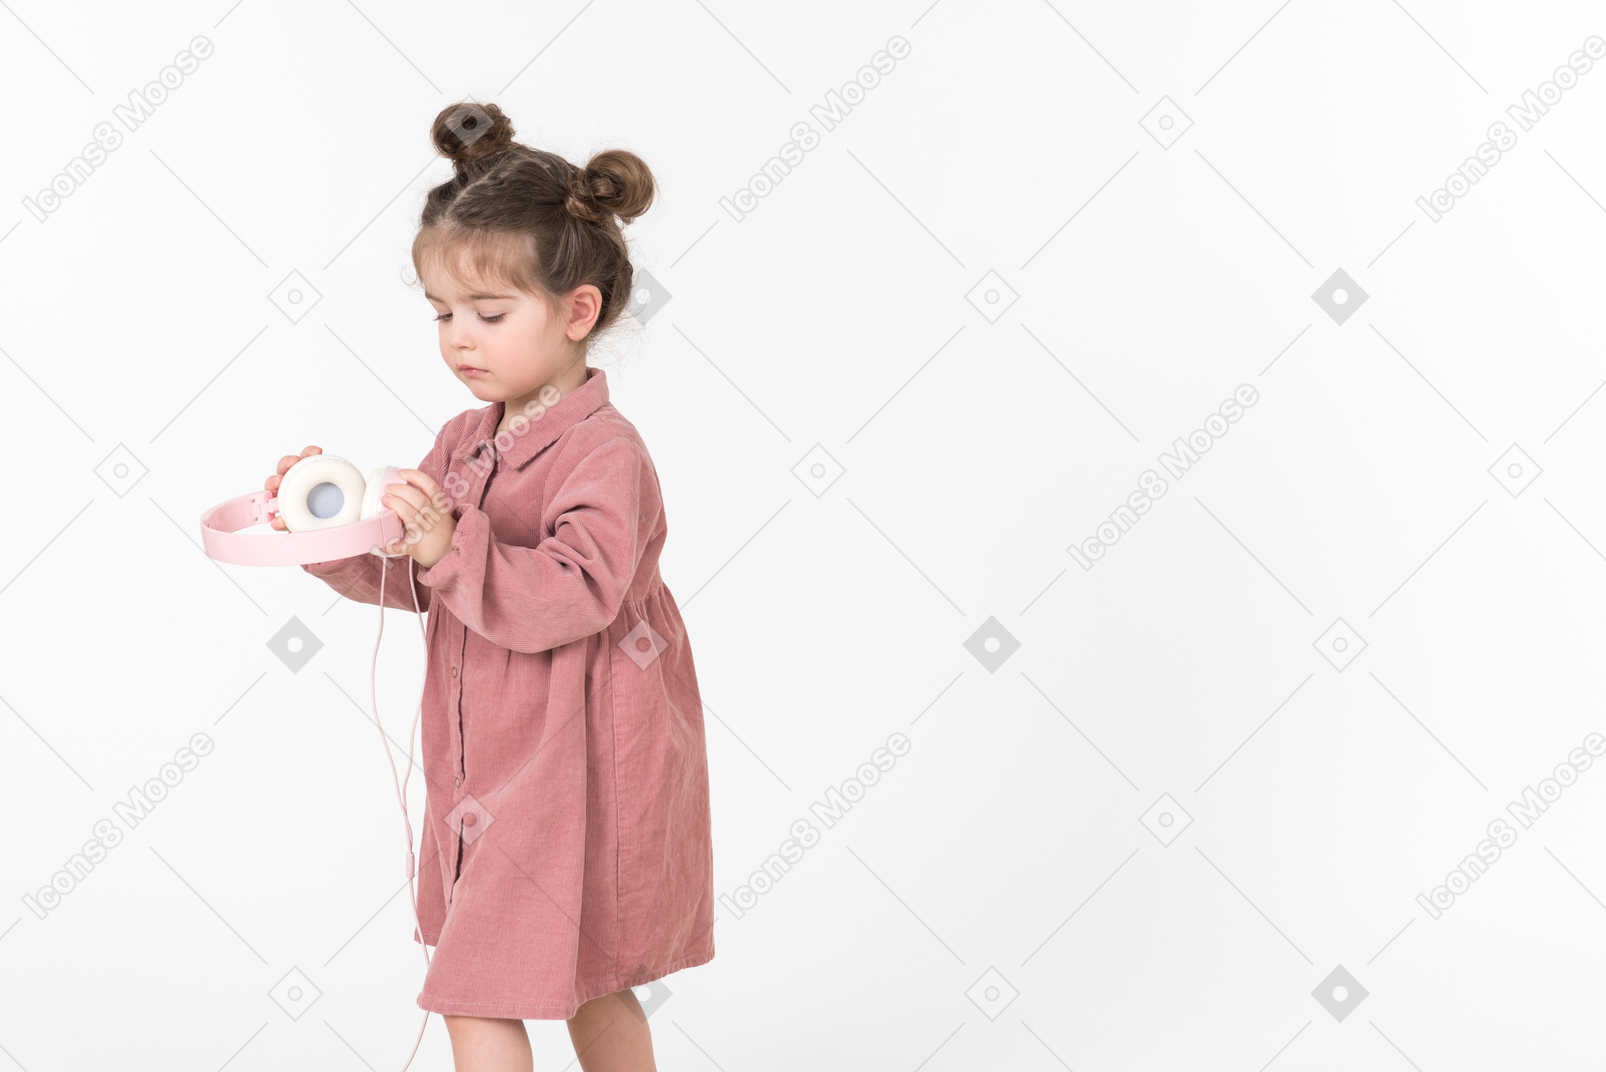 Little kid girl holding pink headphones